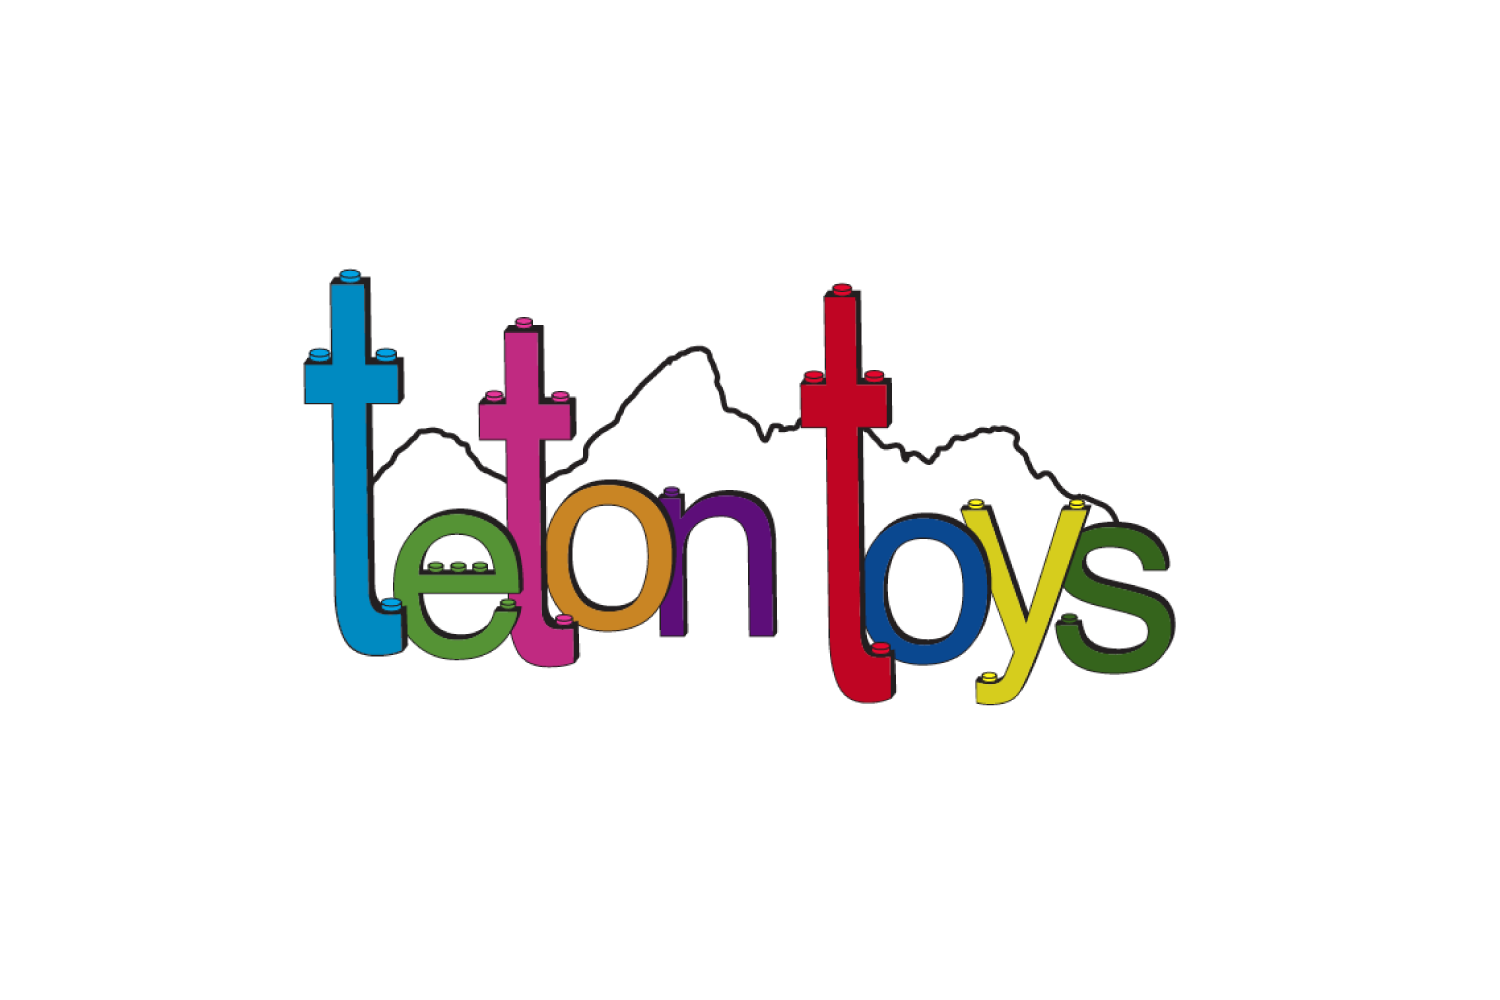 tetontoys_logo